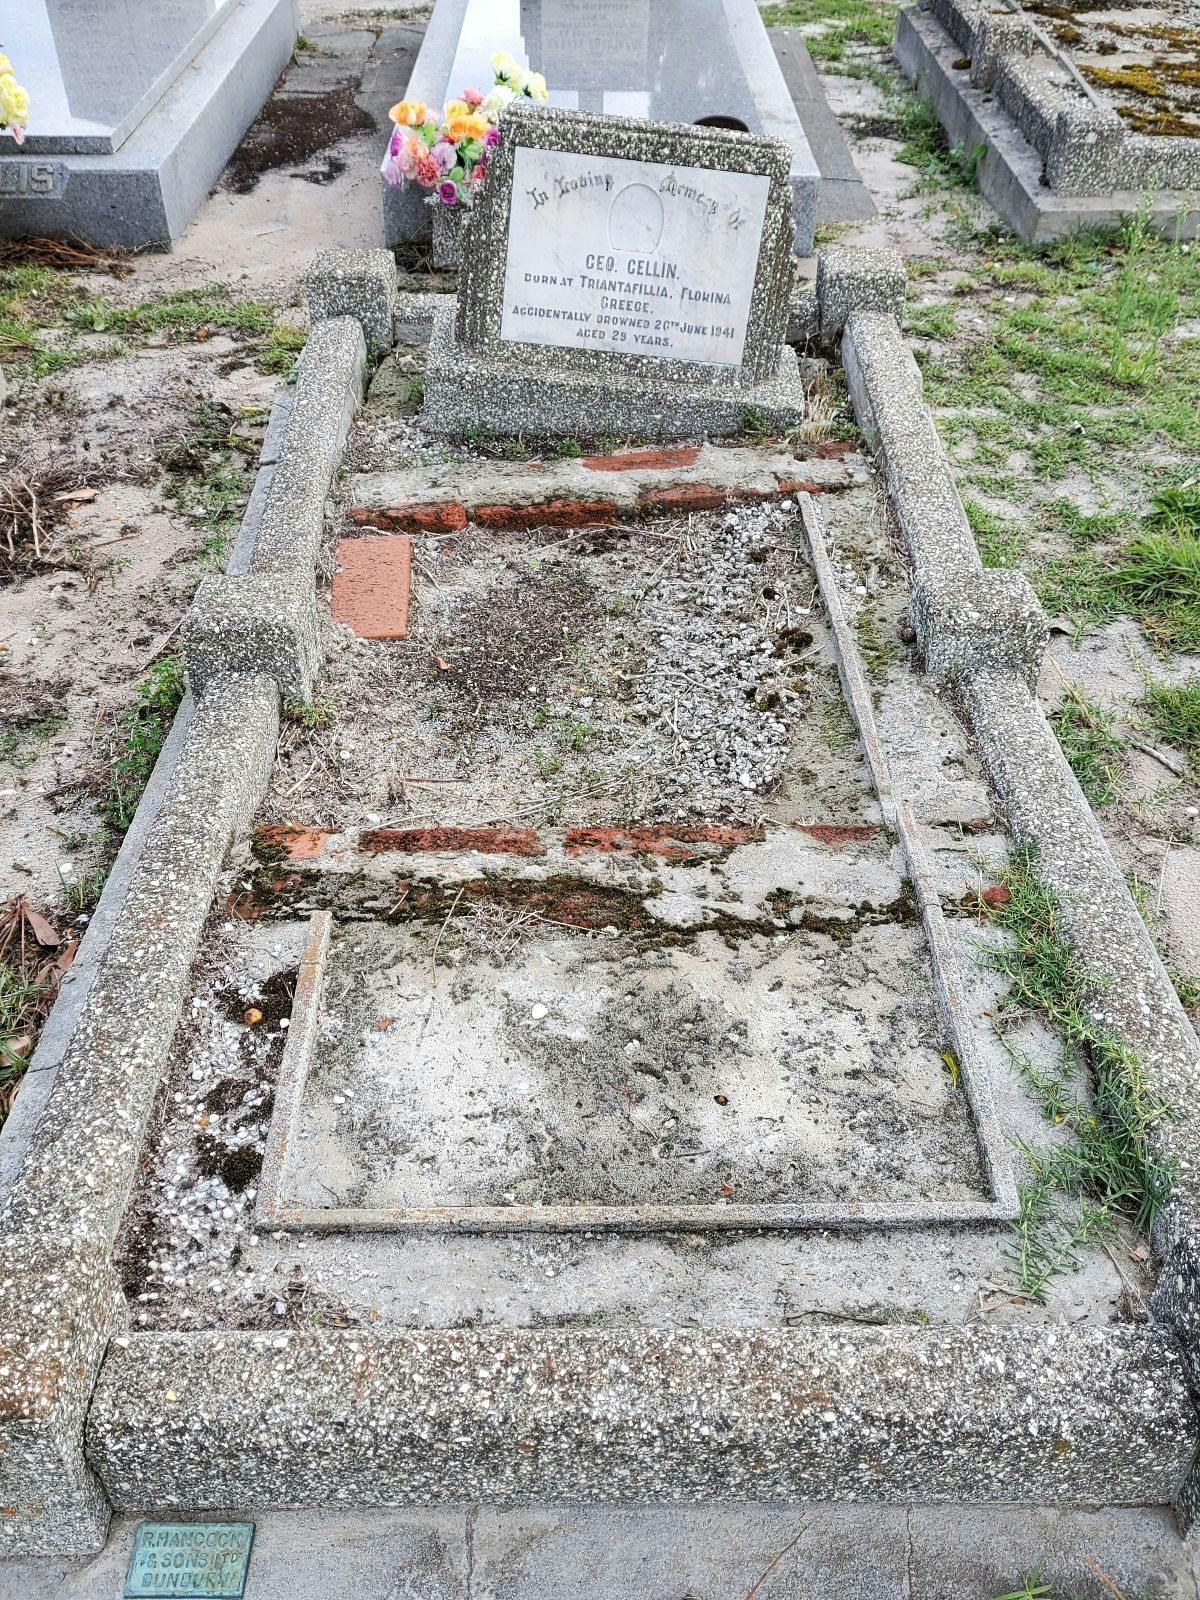 A photo of George Gellin's memorial site in Bunbury